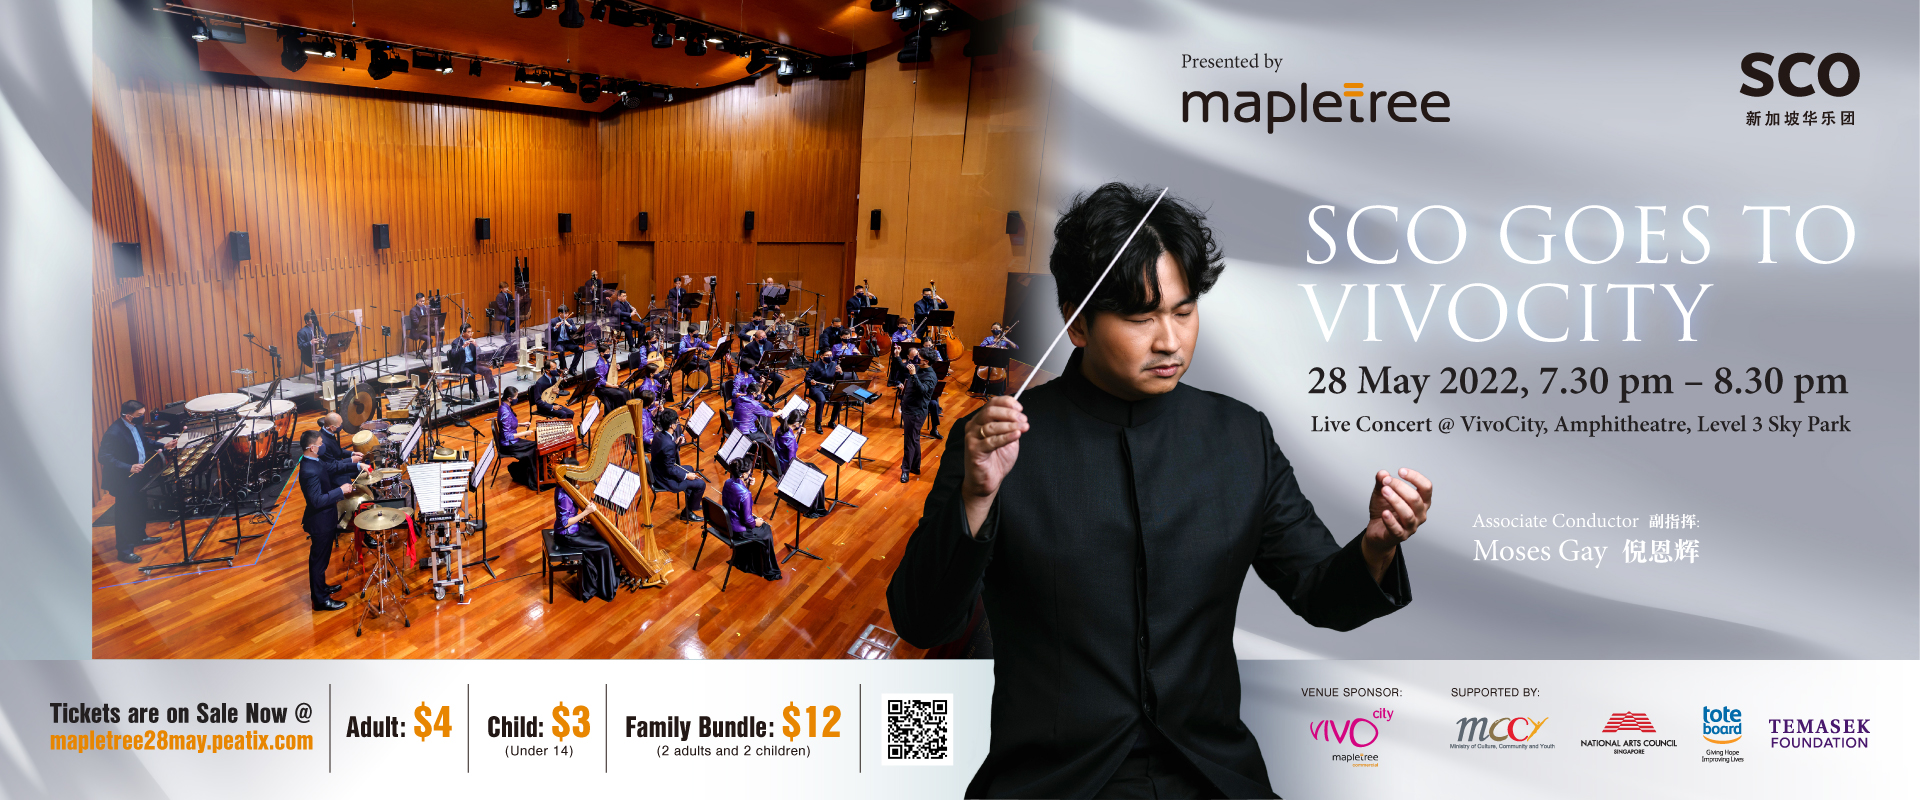 SCO_Mapletree_Concert_1920x800_3 新加坡华乐团午餐音乐会系列